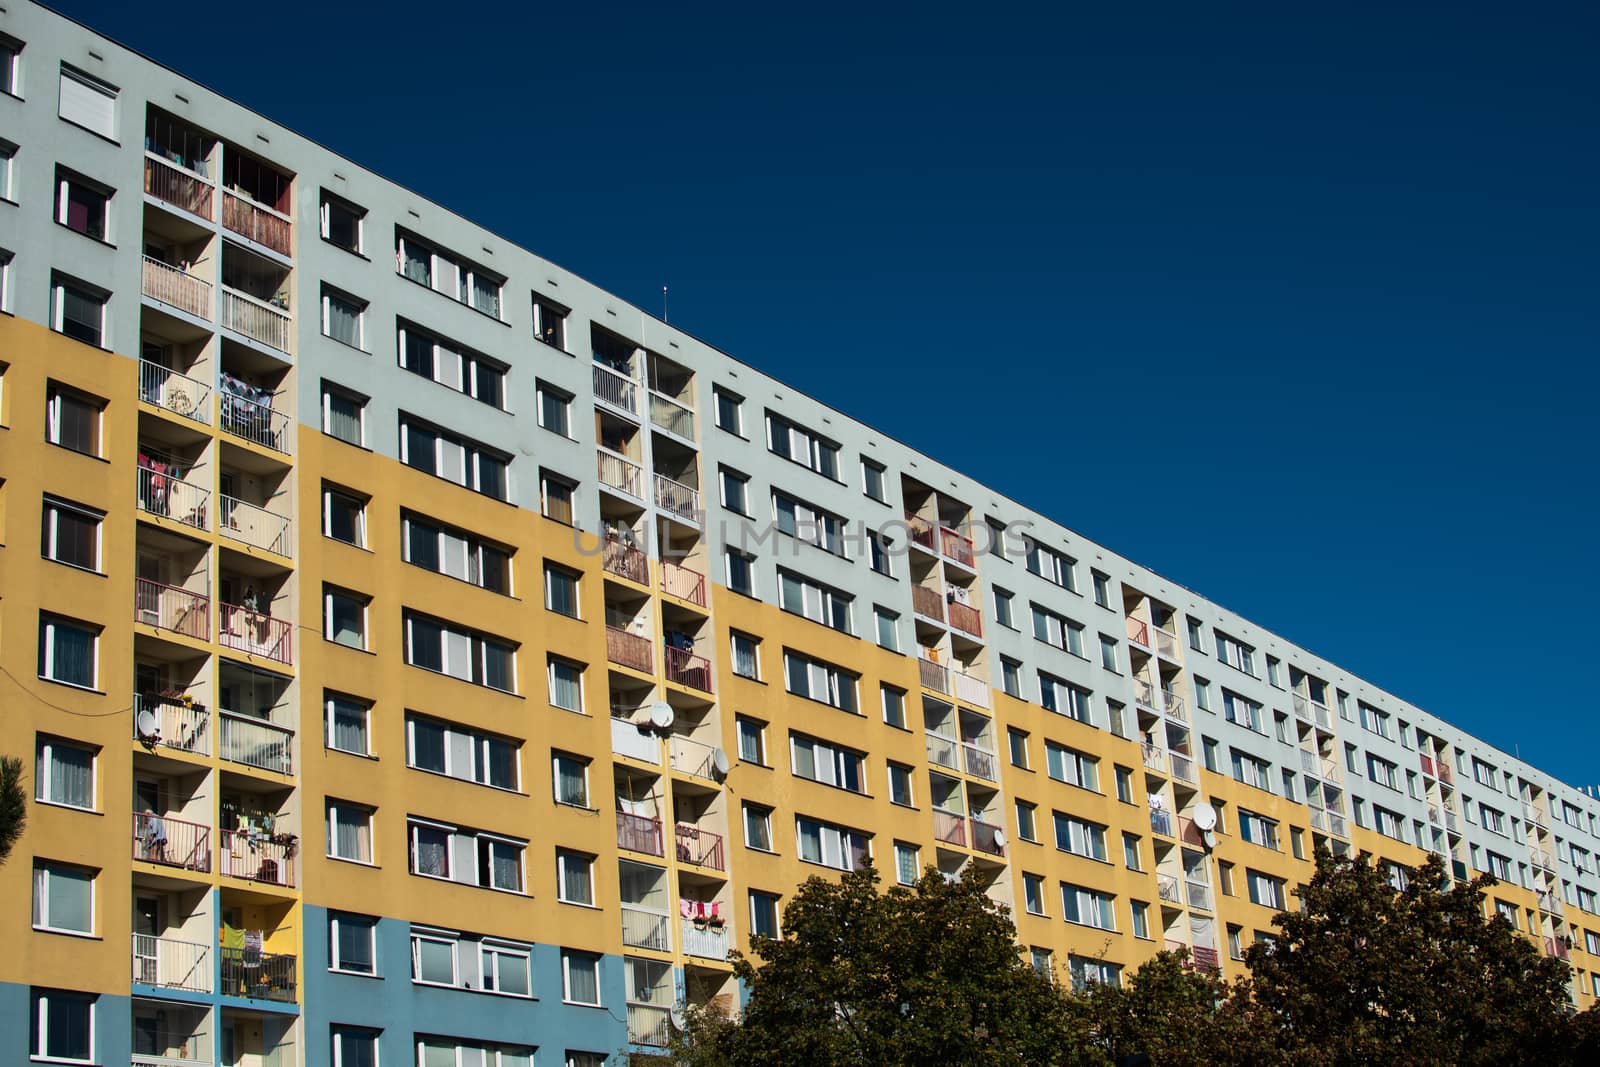 Amazing blue sky viewing concrete building blocks built during the communist era. by gonzalobell